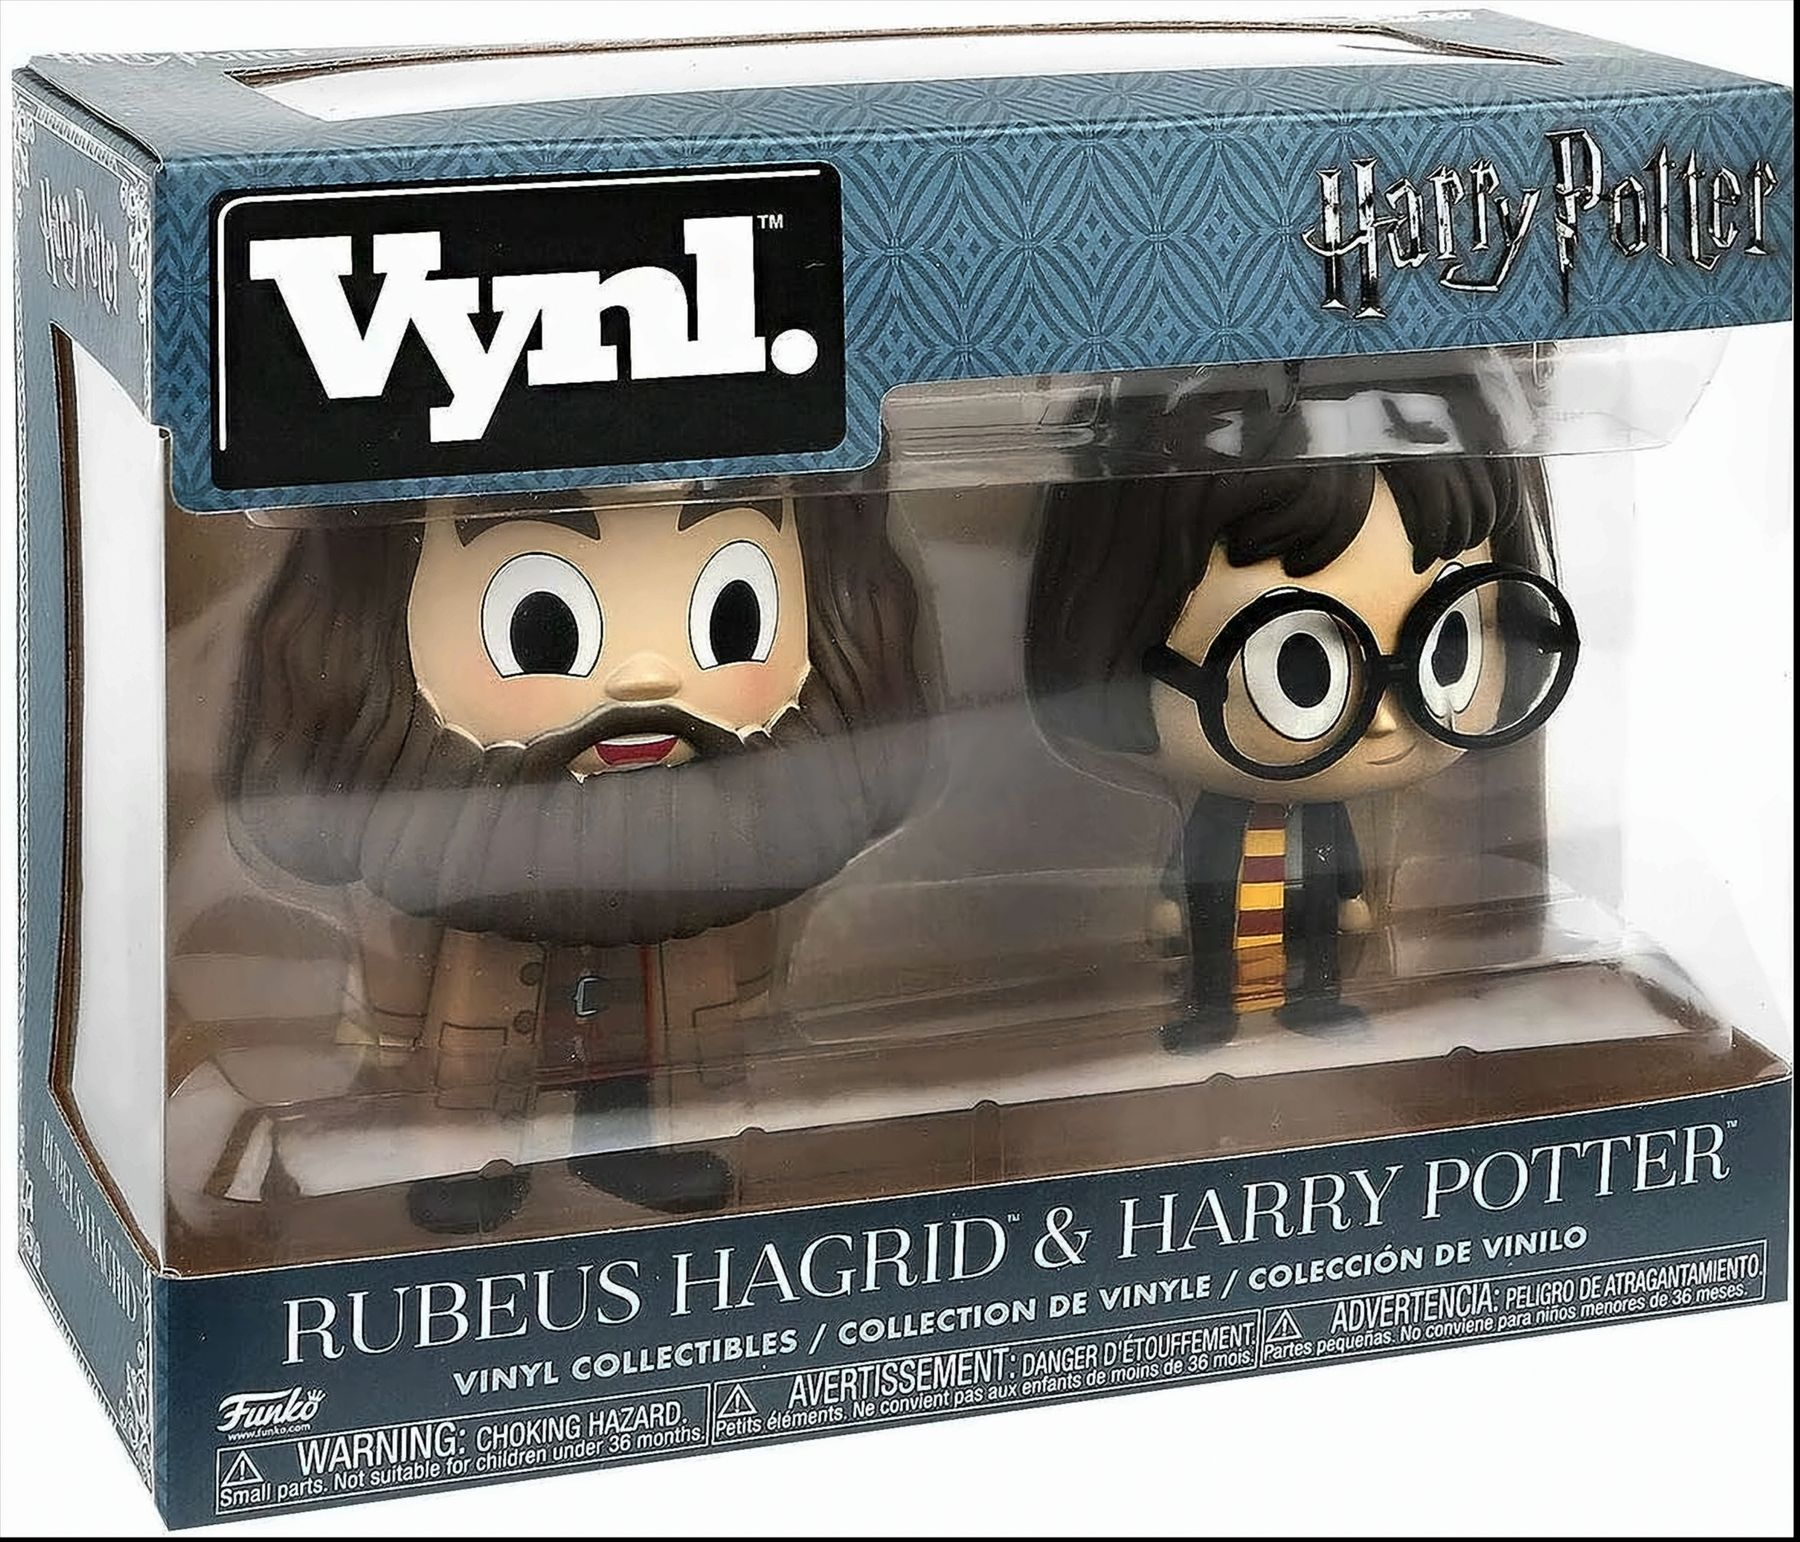 Vynl. Potter Rubeus Potter Harry - Hagrid Harry &